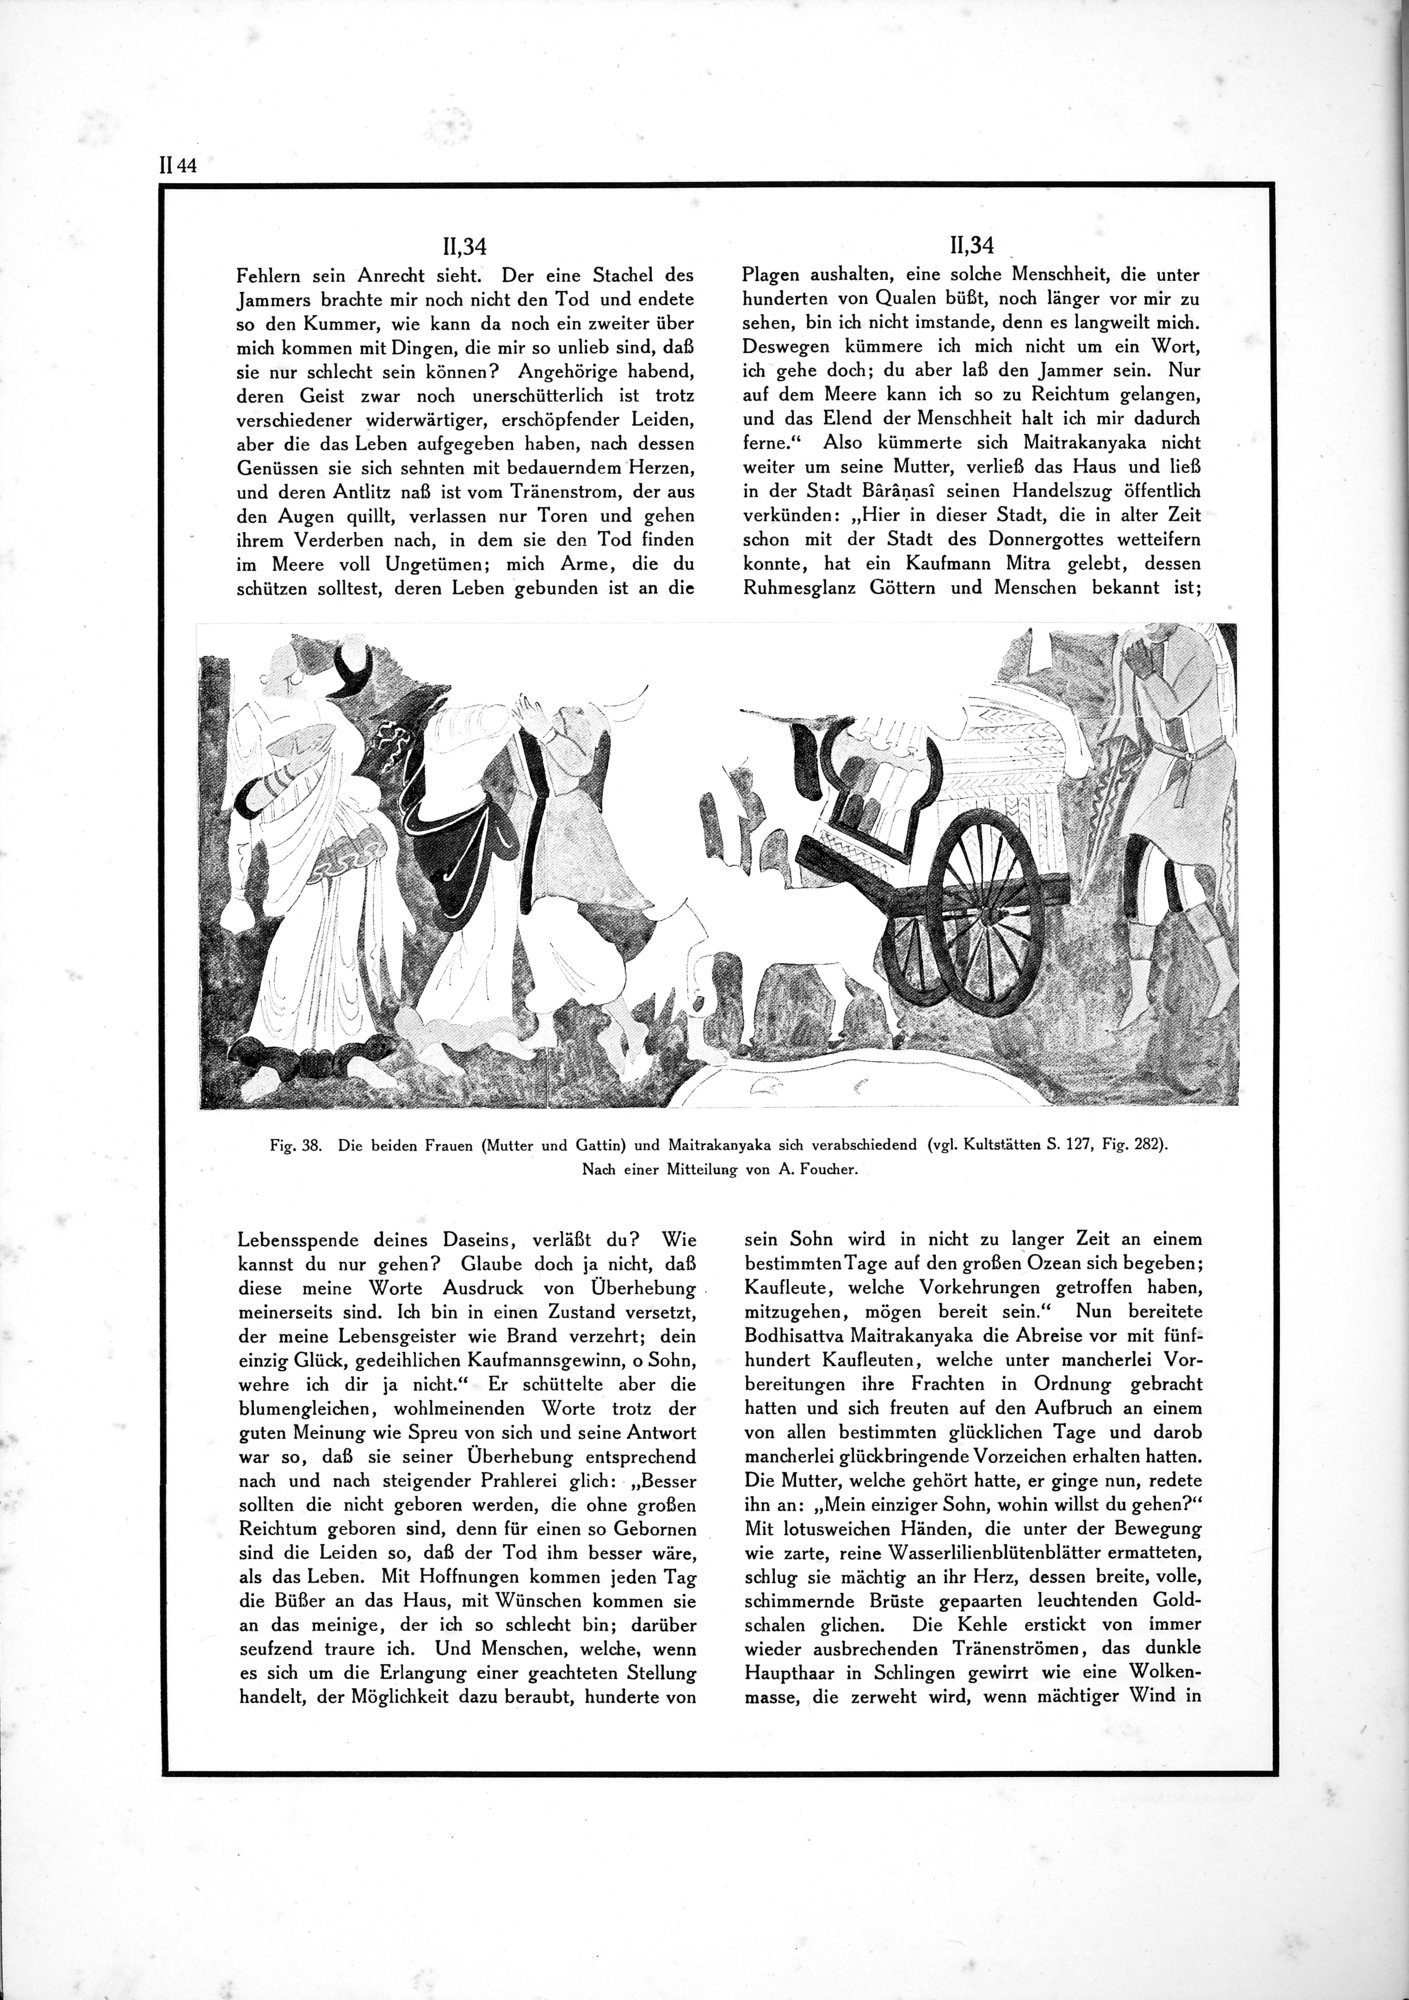 Alt-Kutscha : vol.1 / Page 150 (Grayscale High Resolution Image)